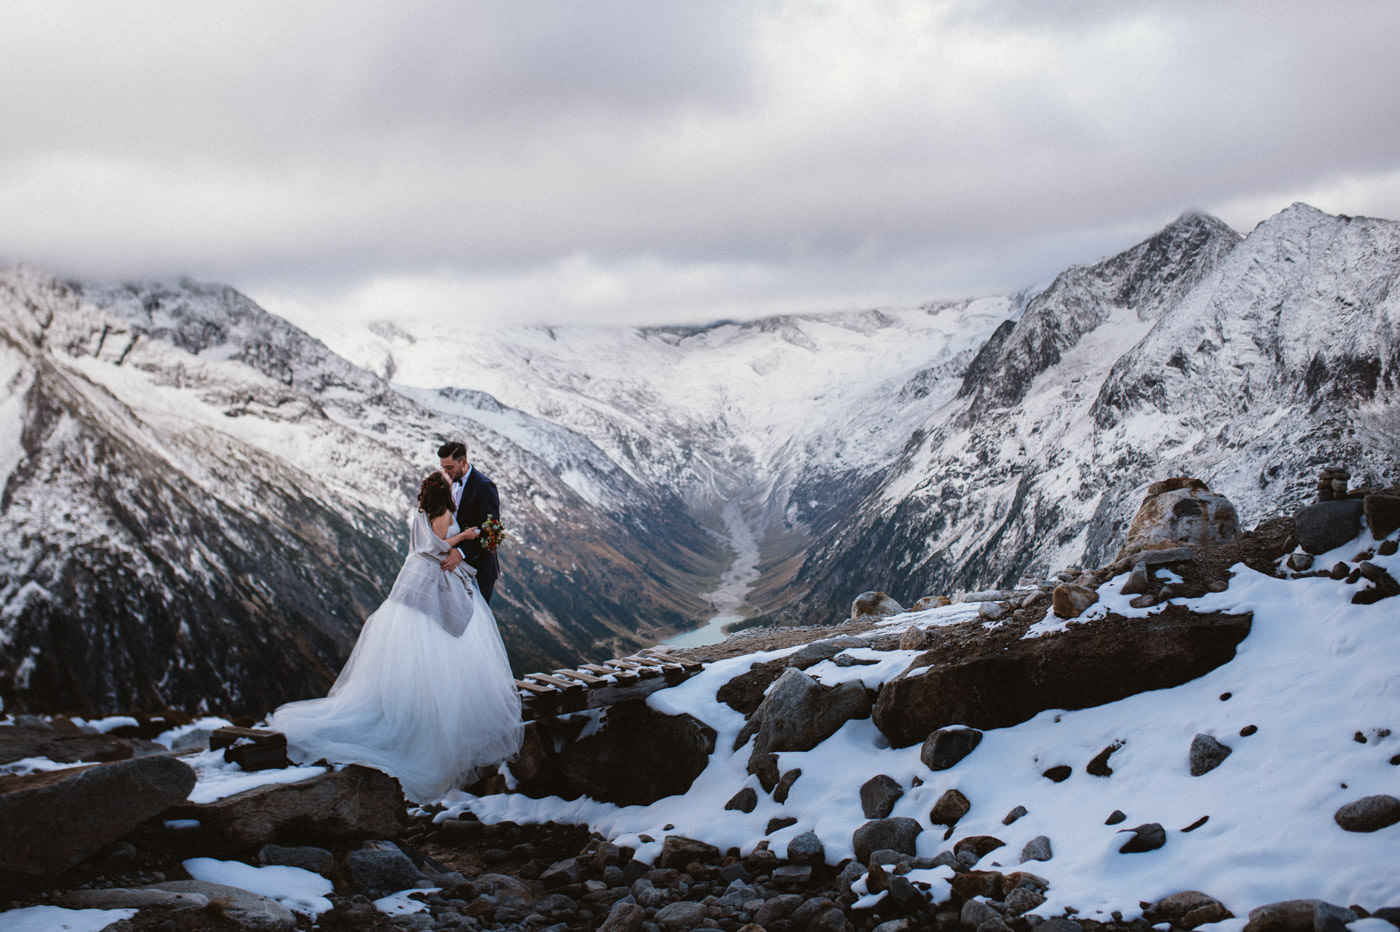 Bridal couple with mountain backdrop - Adventurous Elopement in Austria